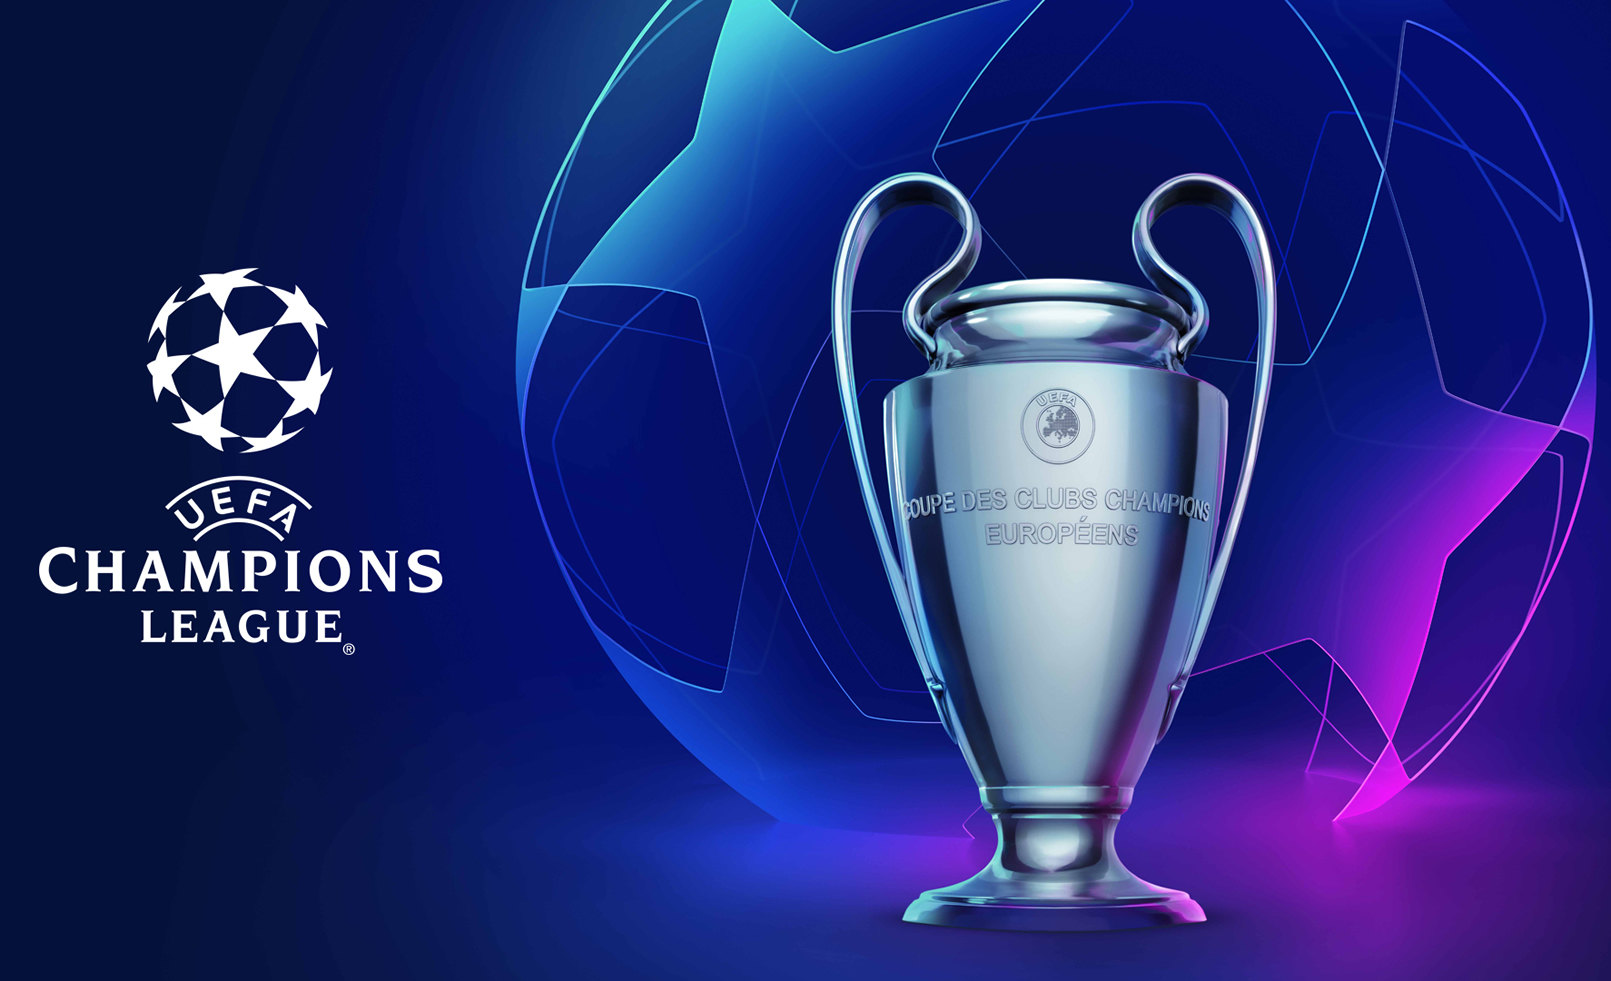 2018 uefa champions league